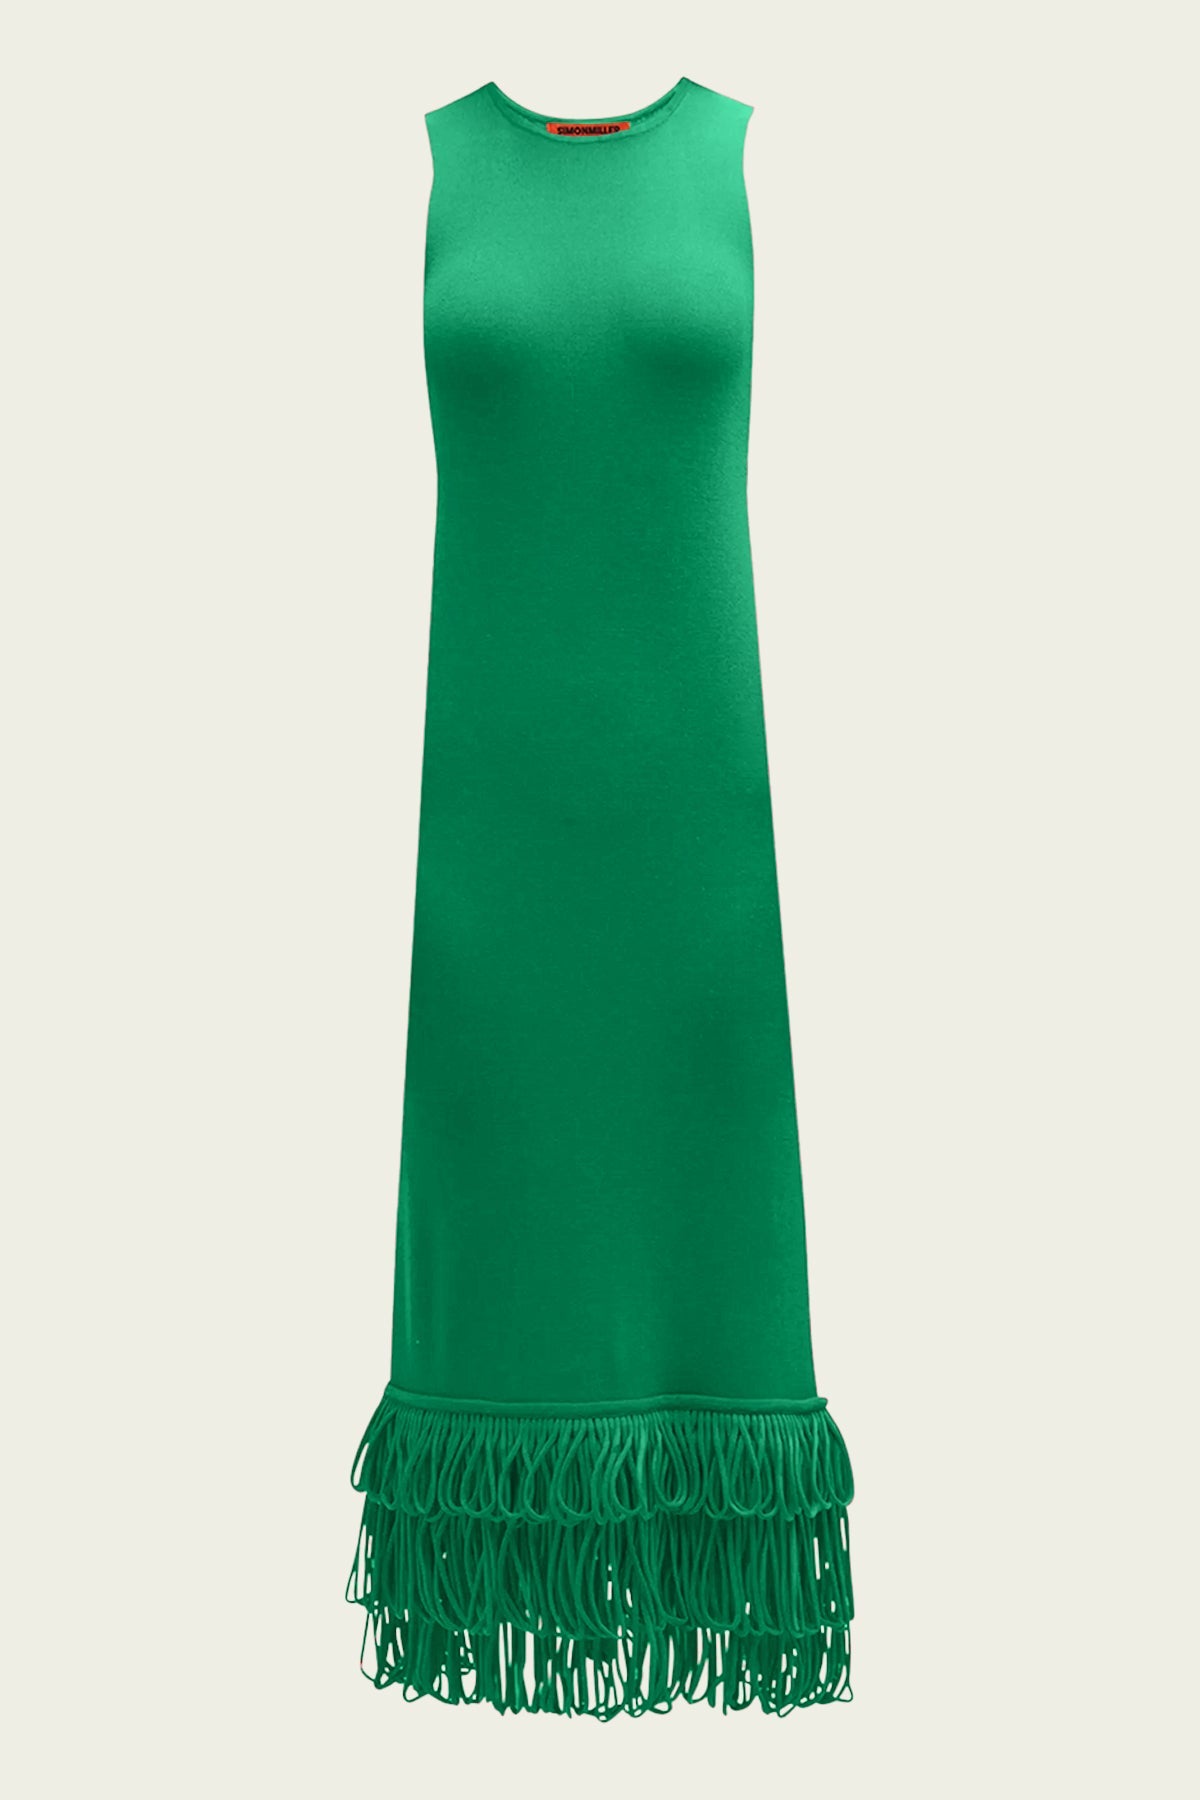 Albers Knit Dress in Gummy Green - shop-olivia.com